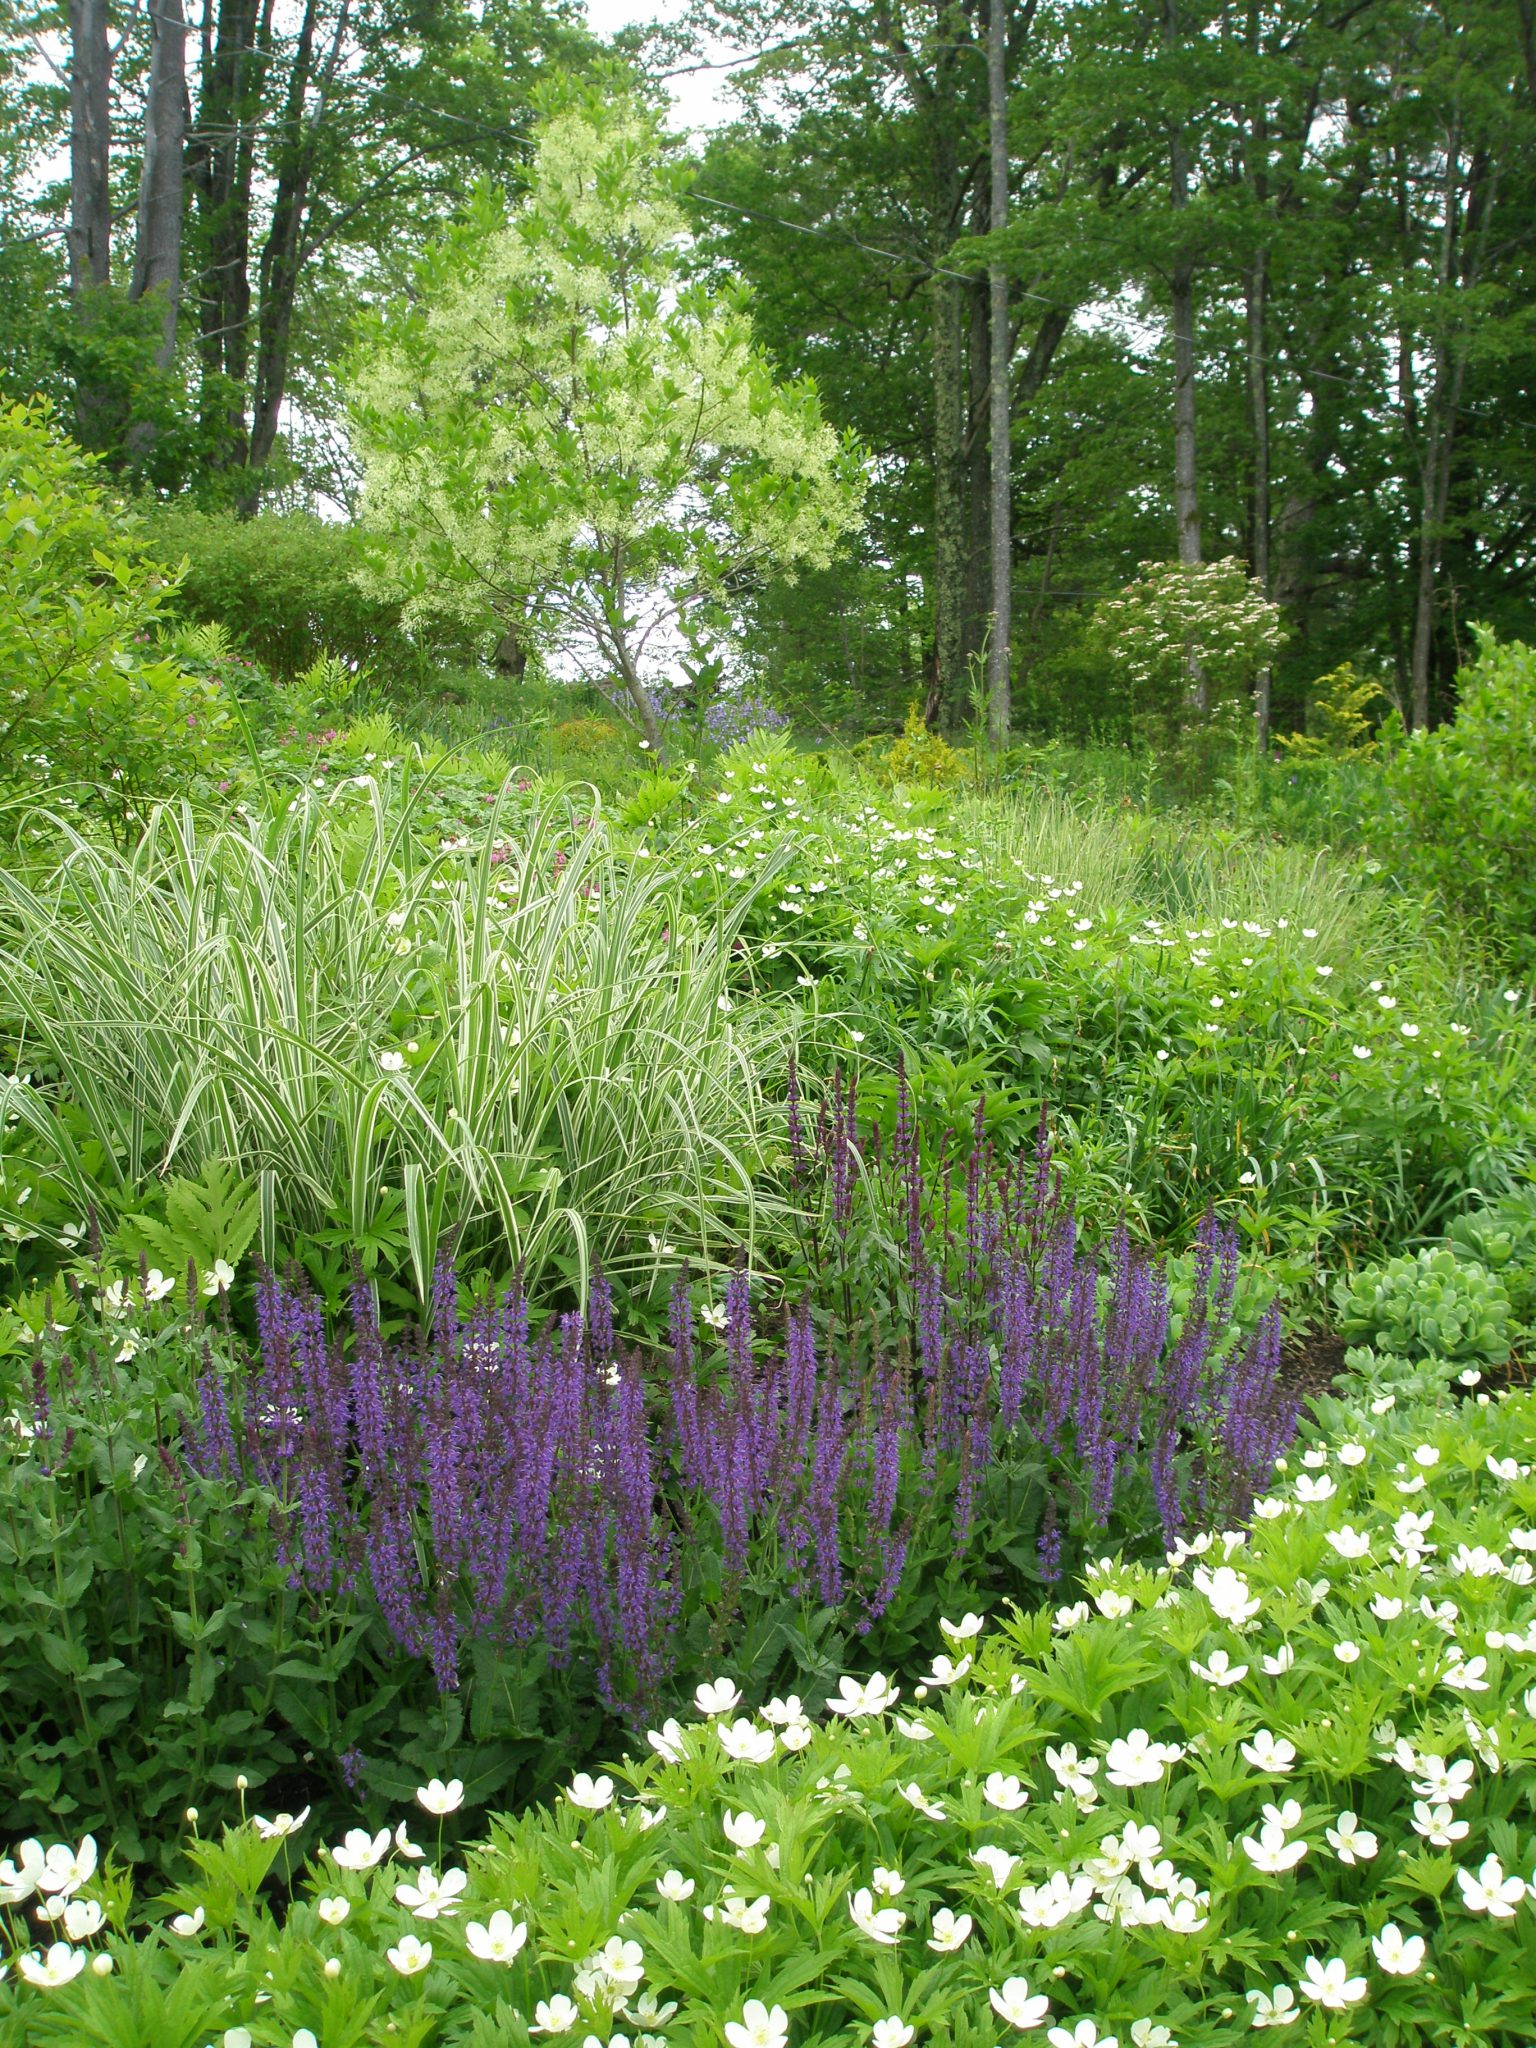 Purple Salvia and Ornamental Grasses begin to emerge